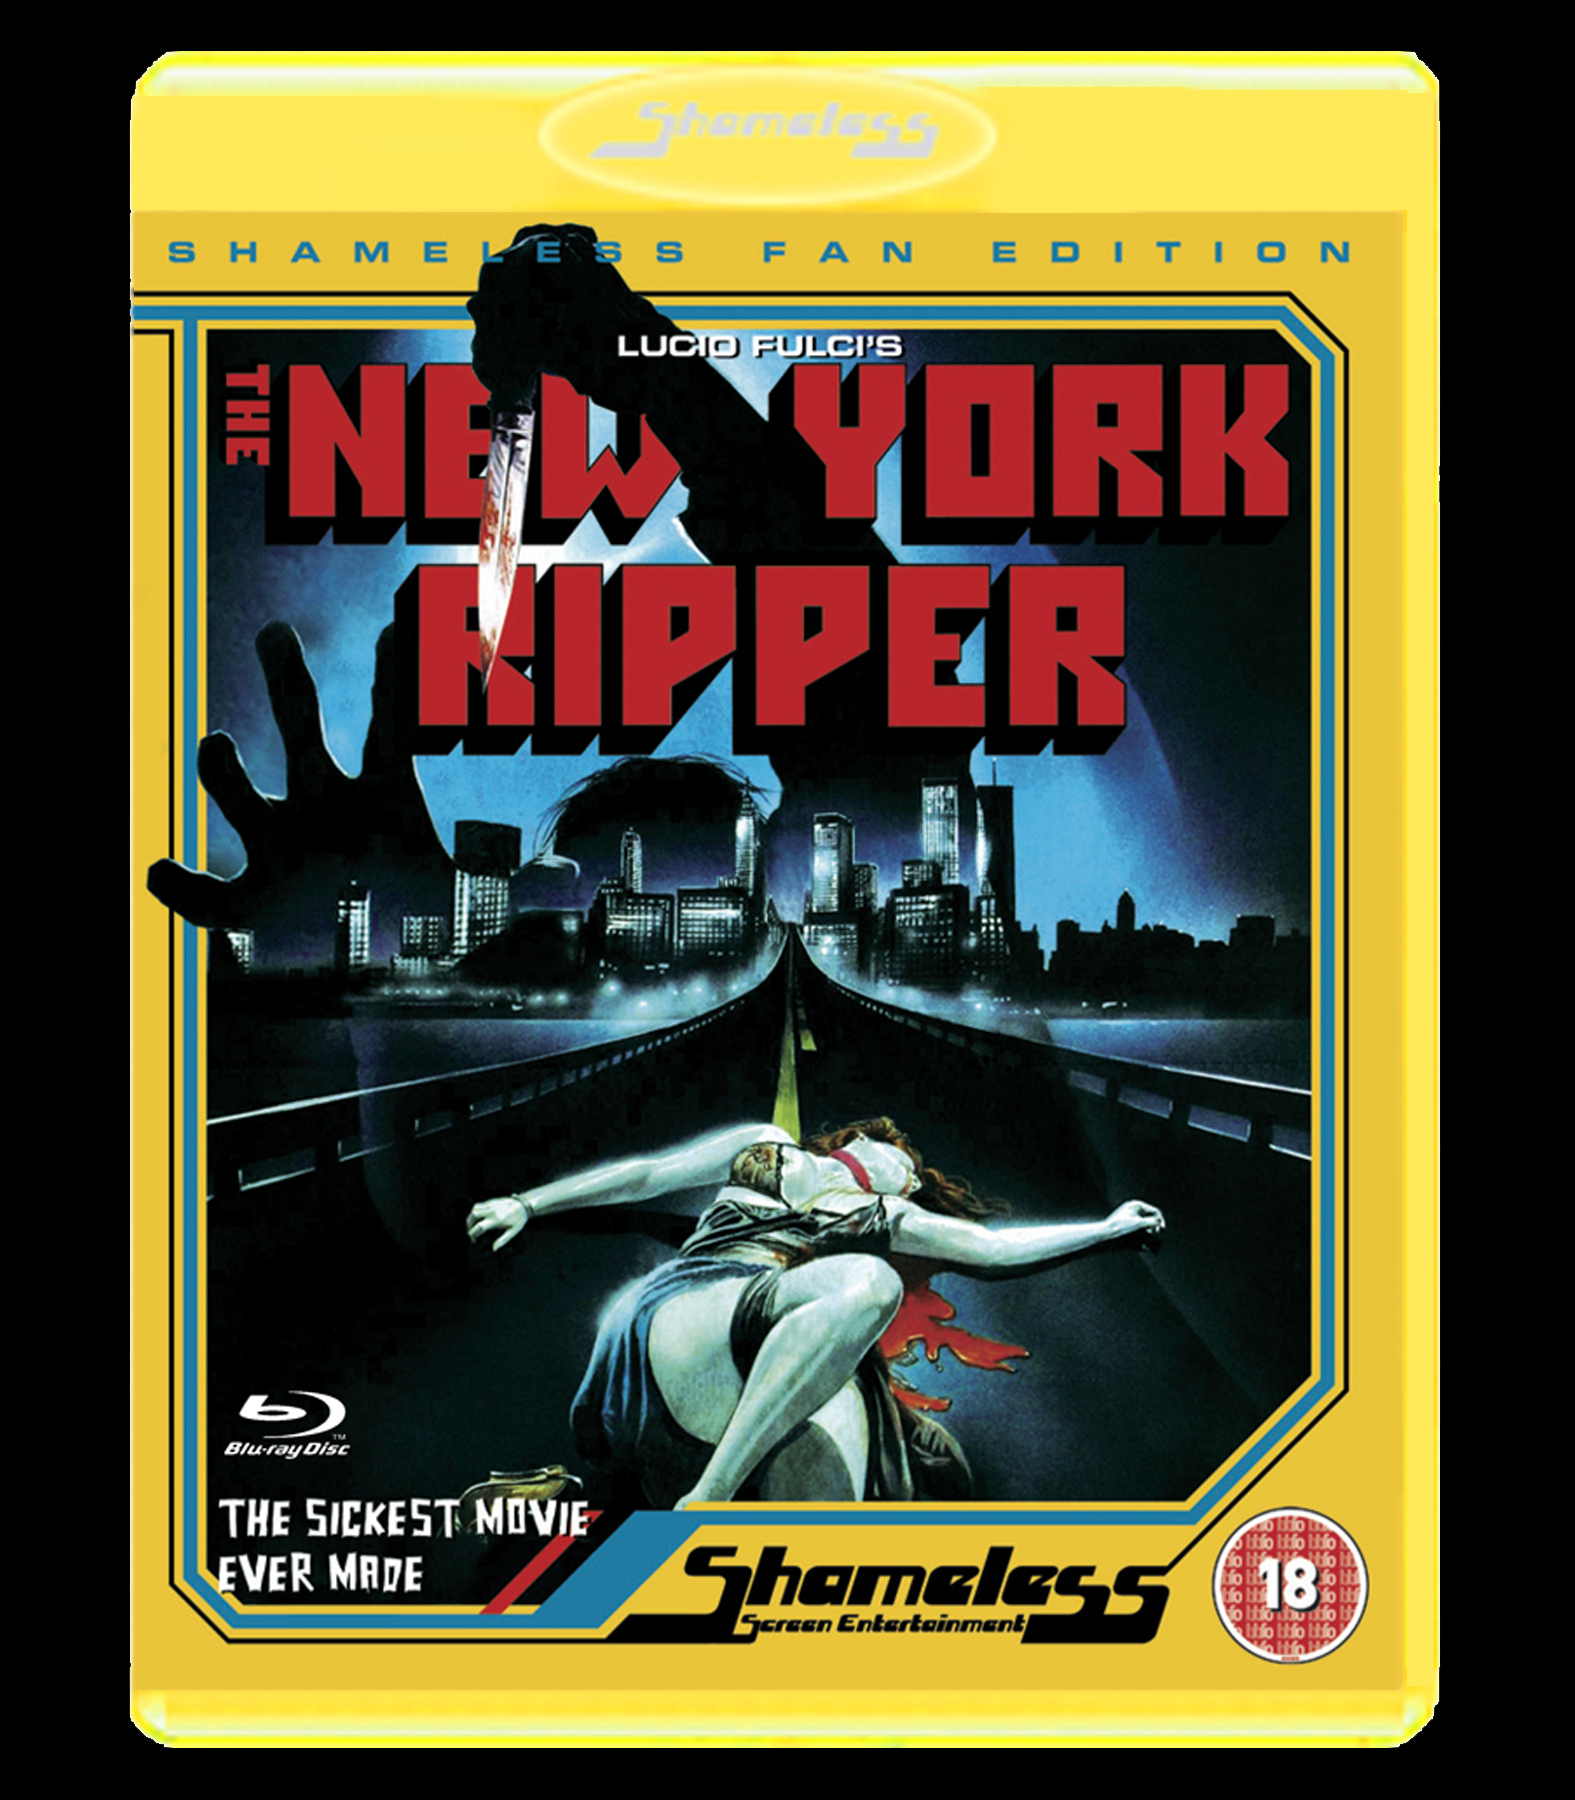 The New York Ripper Fan Edition Fetch Publicity